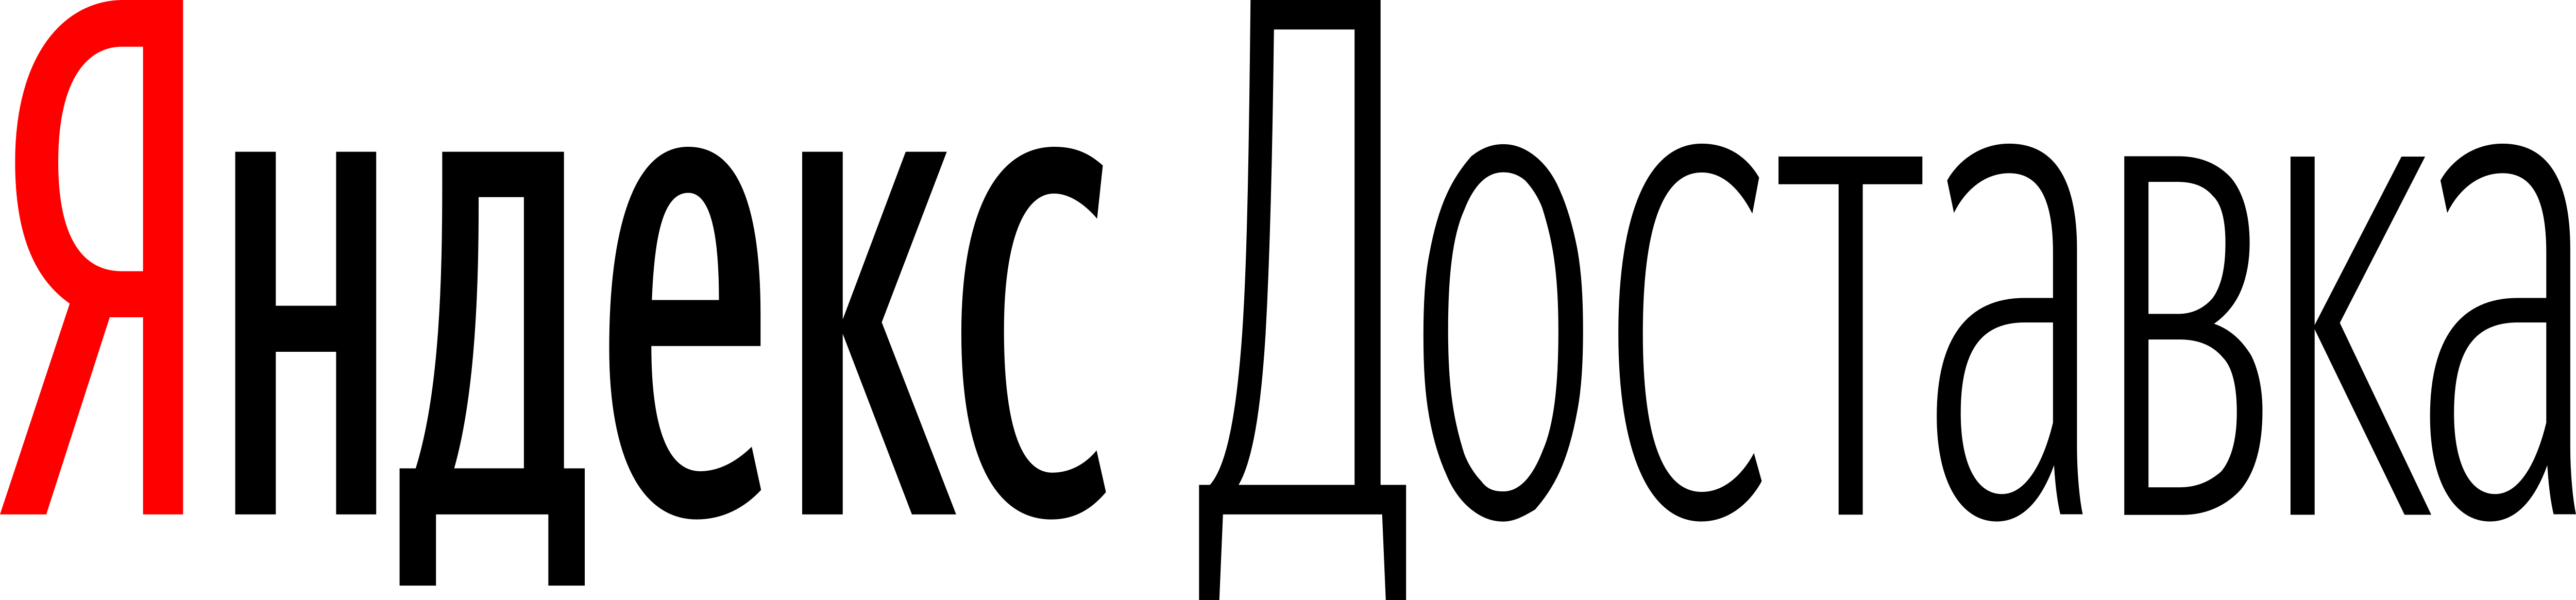 Yandex Logo Transparent Background